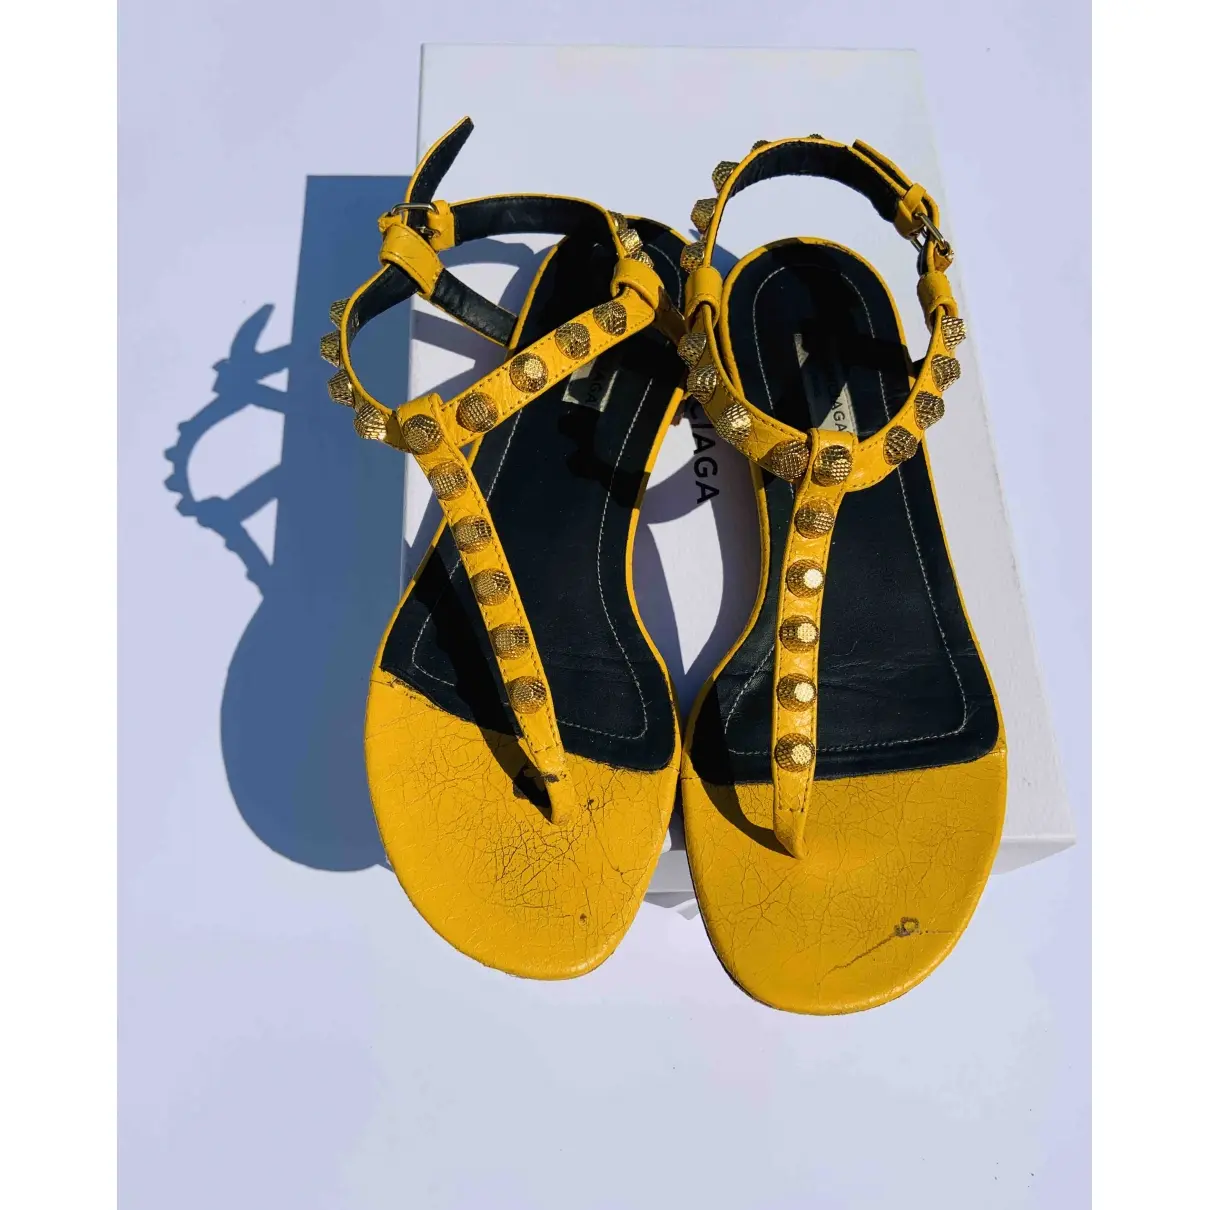 Buy Balenciaga Leather sandal online